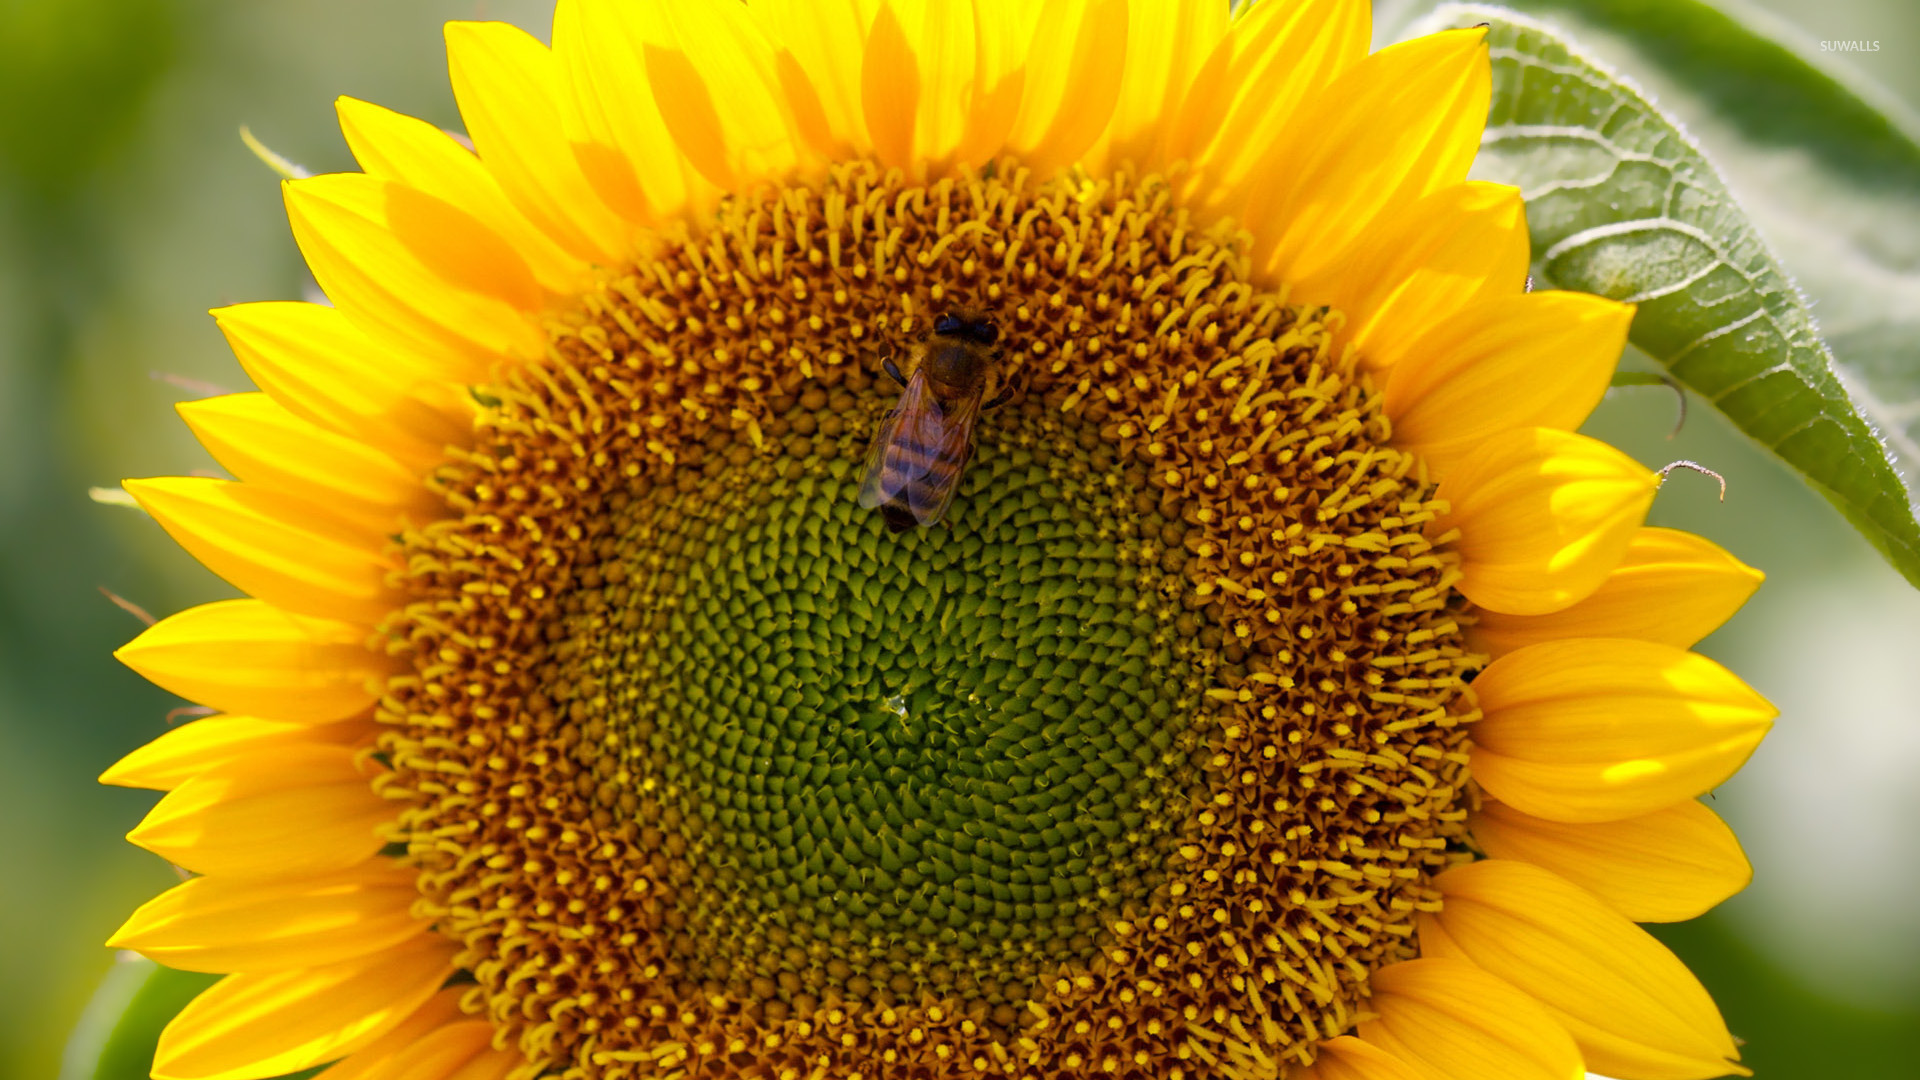 Bee on sunflower wallpaper - Flower wallpapers - #45992